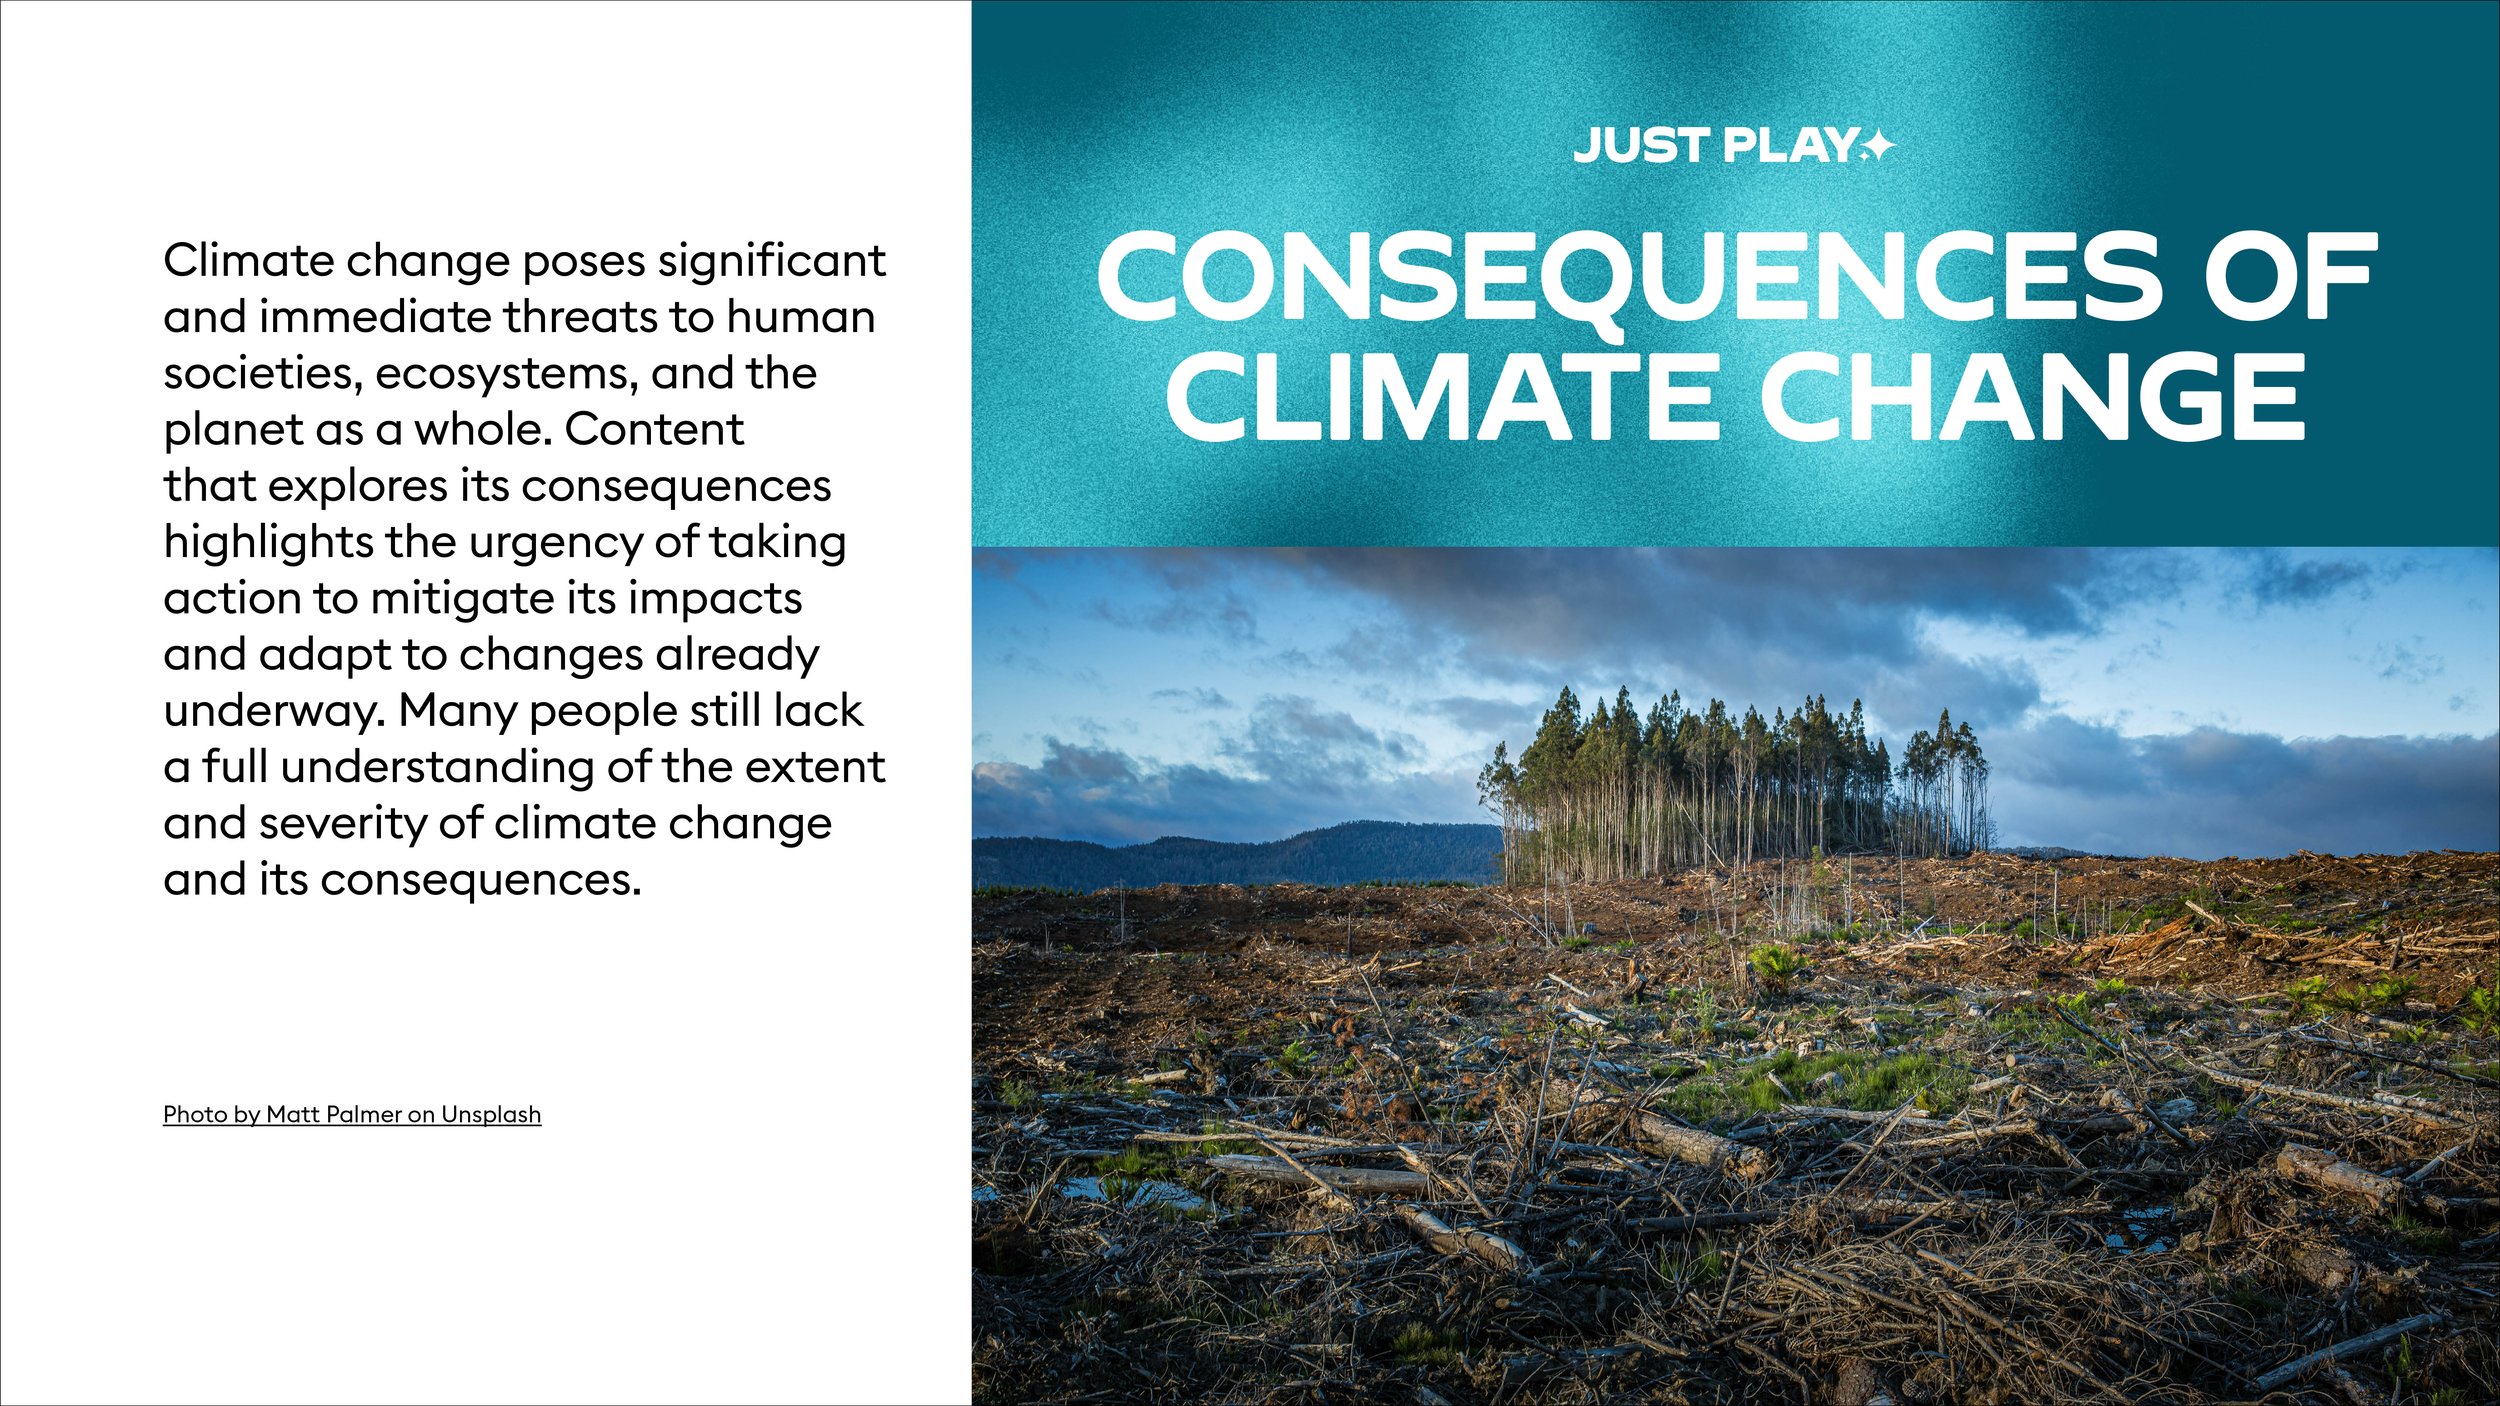 JustPlay_ClimateFuturesToolkit24.jpg